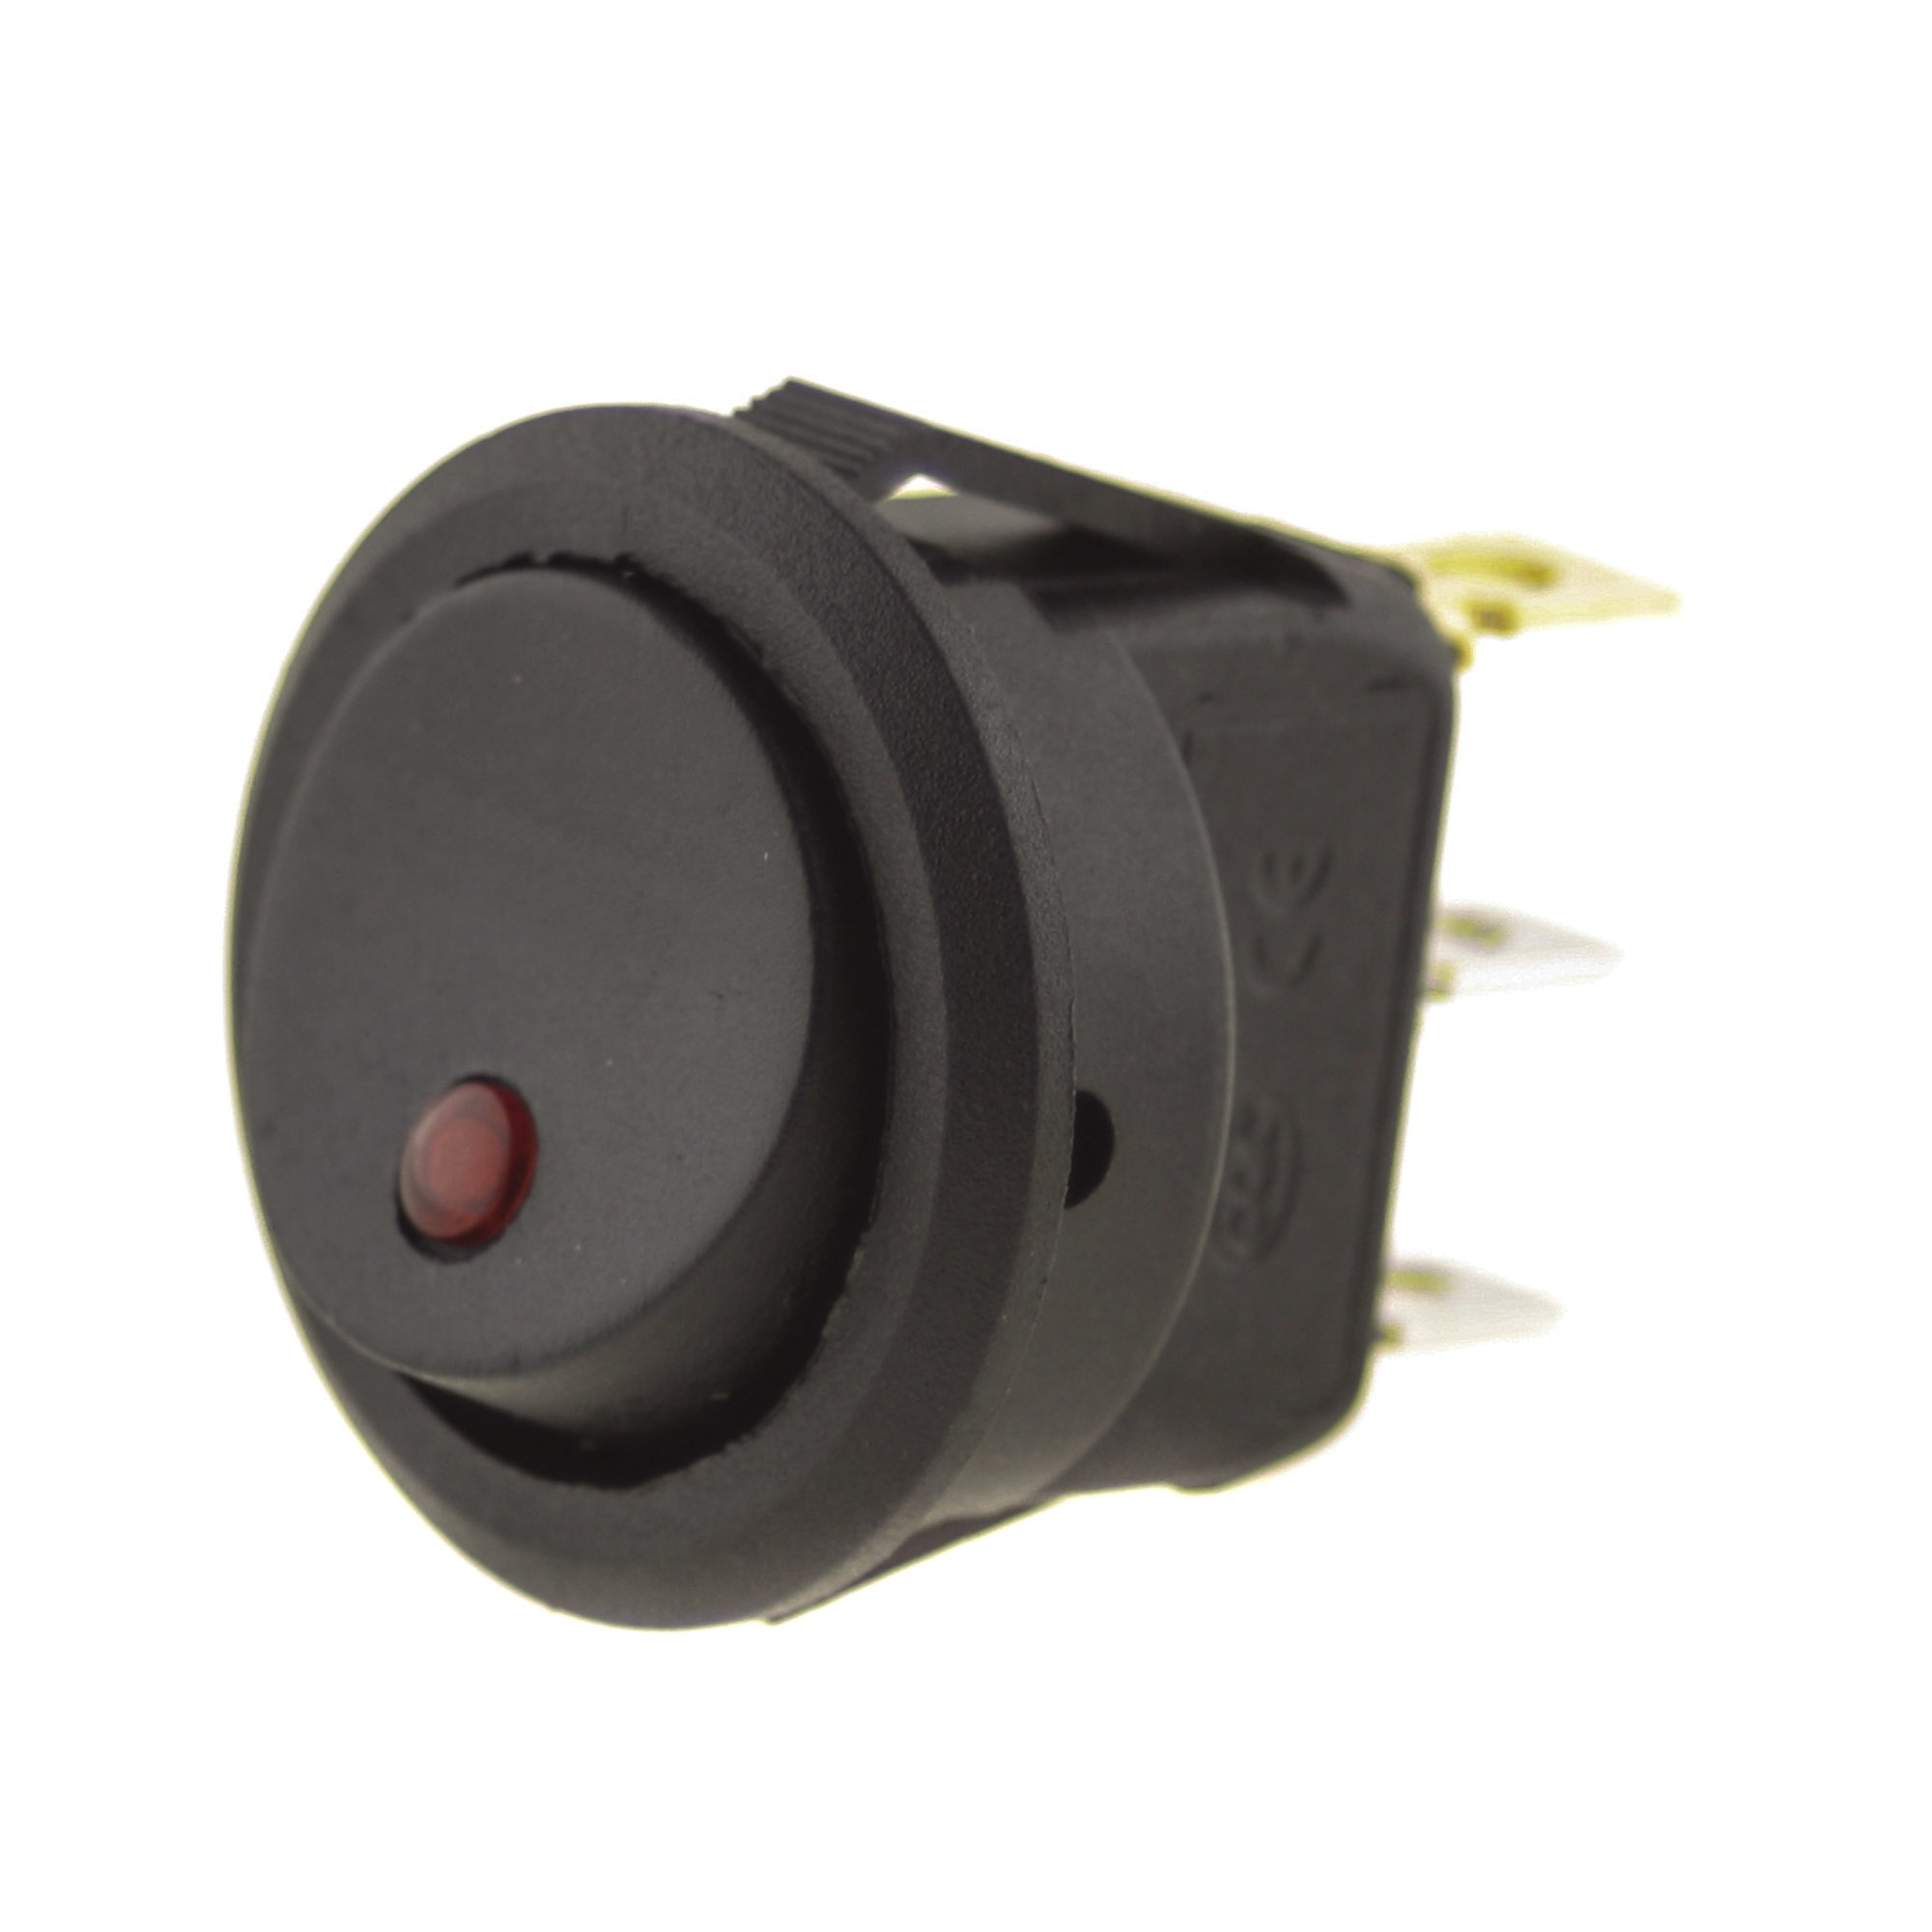 Switch I-0 12V 16A, 23mm, round, red